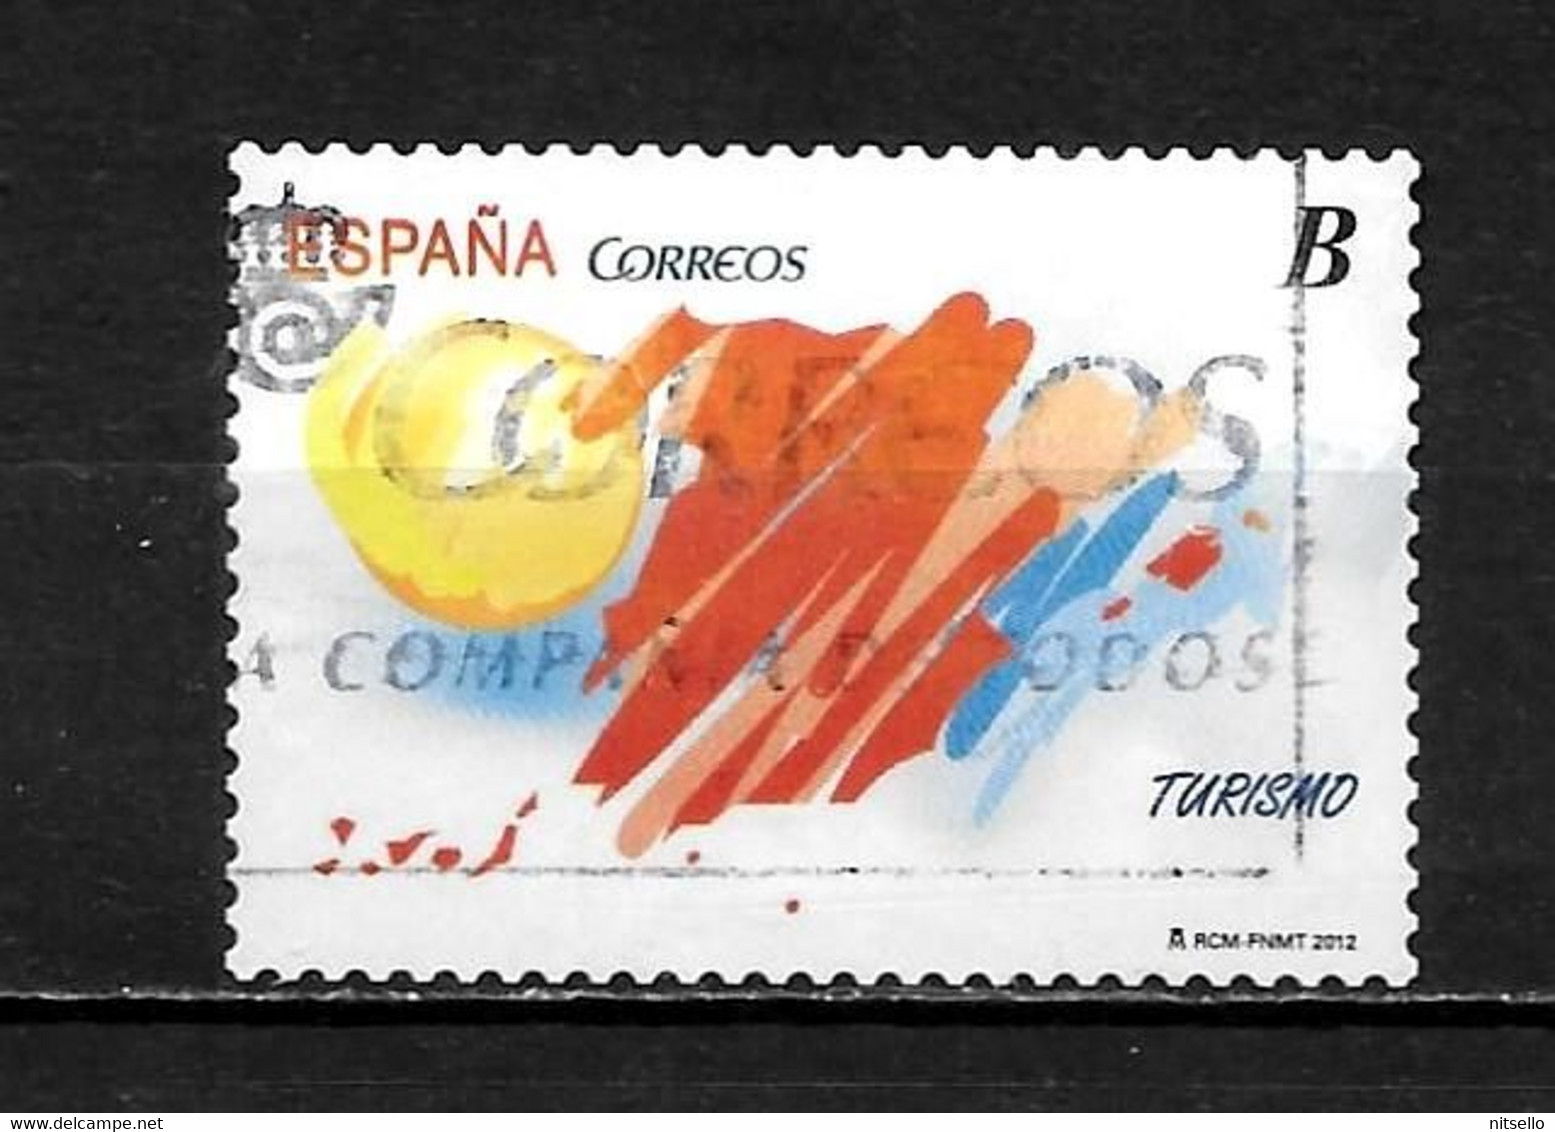 LOTE 2183  ///  ESPAÑA  2012          ¡¡¡ OFERTA - LIQUIDATION - JE LIQUIDE !!! - Used Stamps